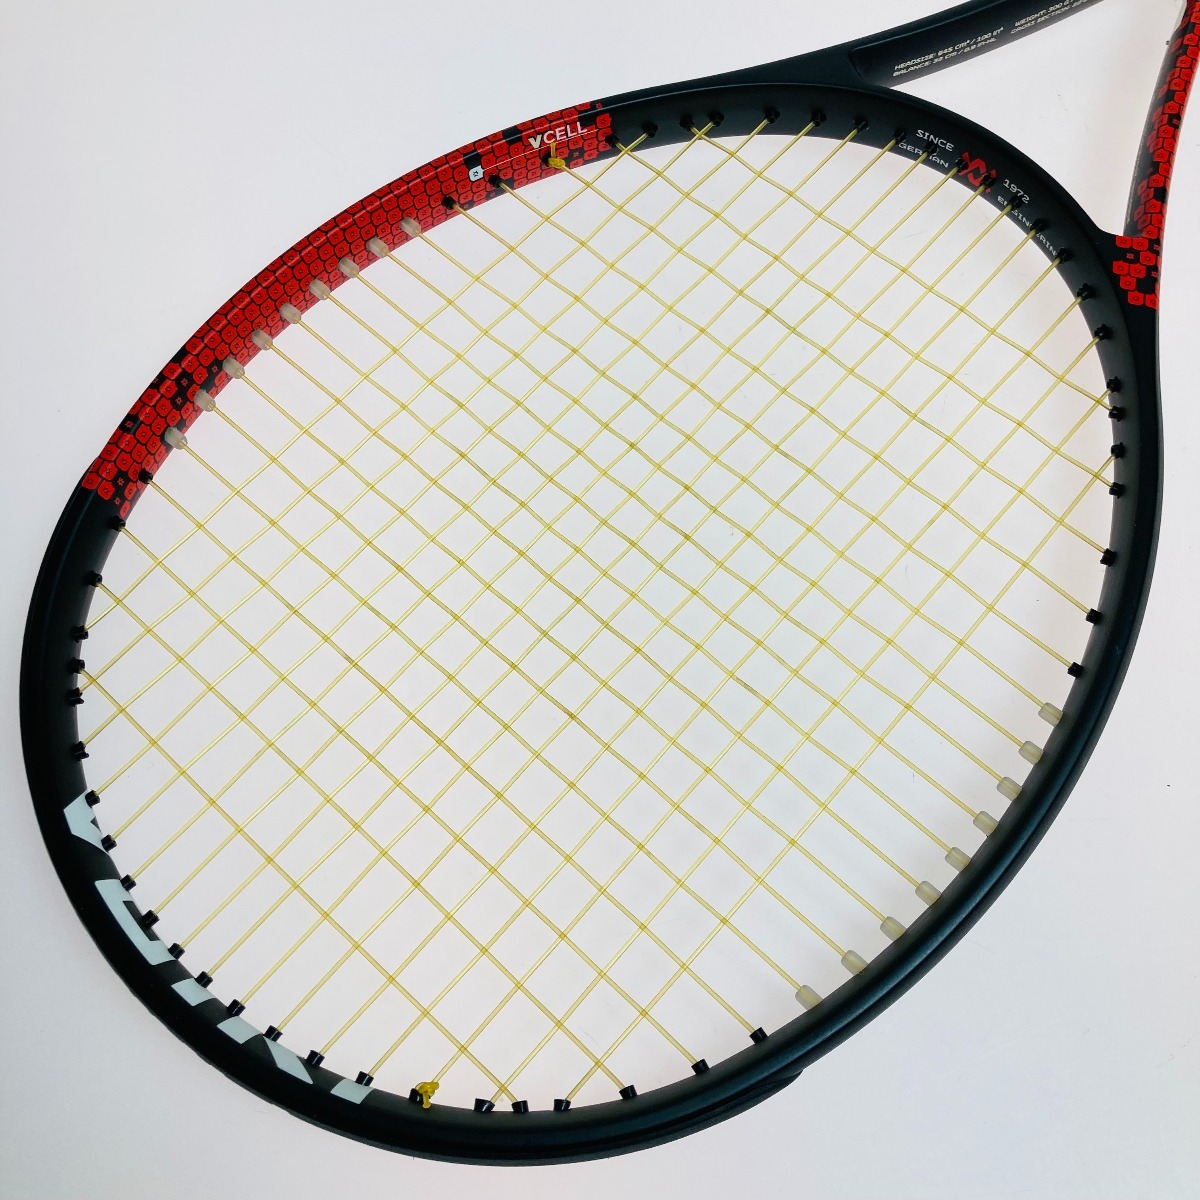 ◎◎ VOLKL フォルクル V-FEEL 8 300 V-フィール テニスラケット G2 やや傷や汚れあり_画像2